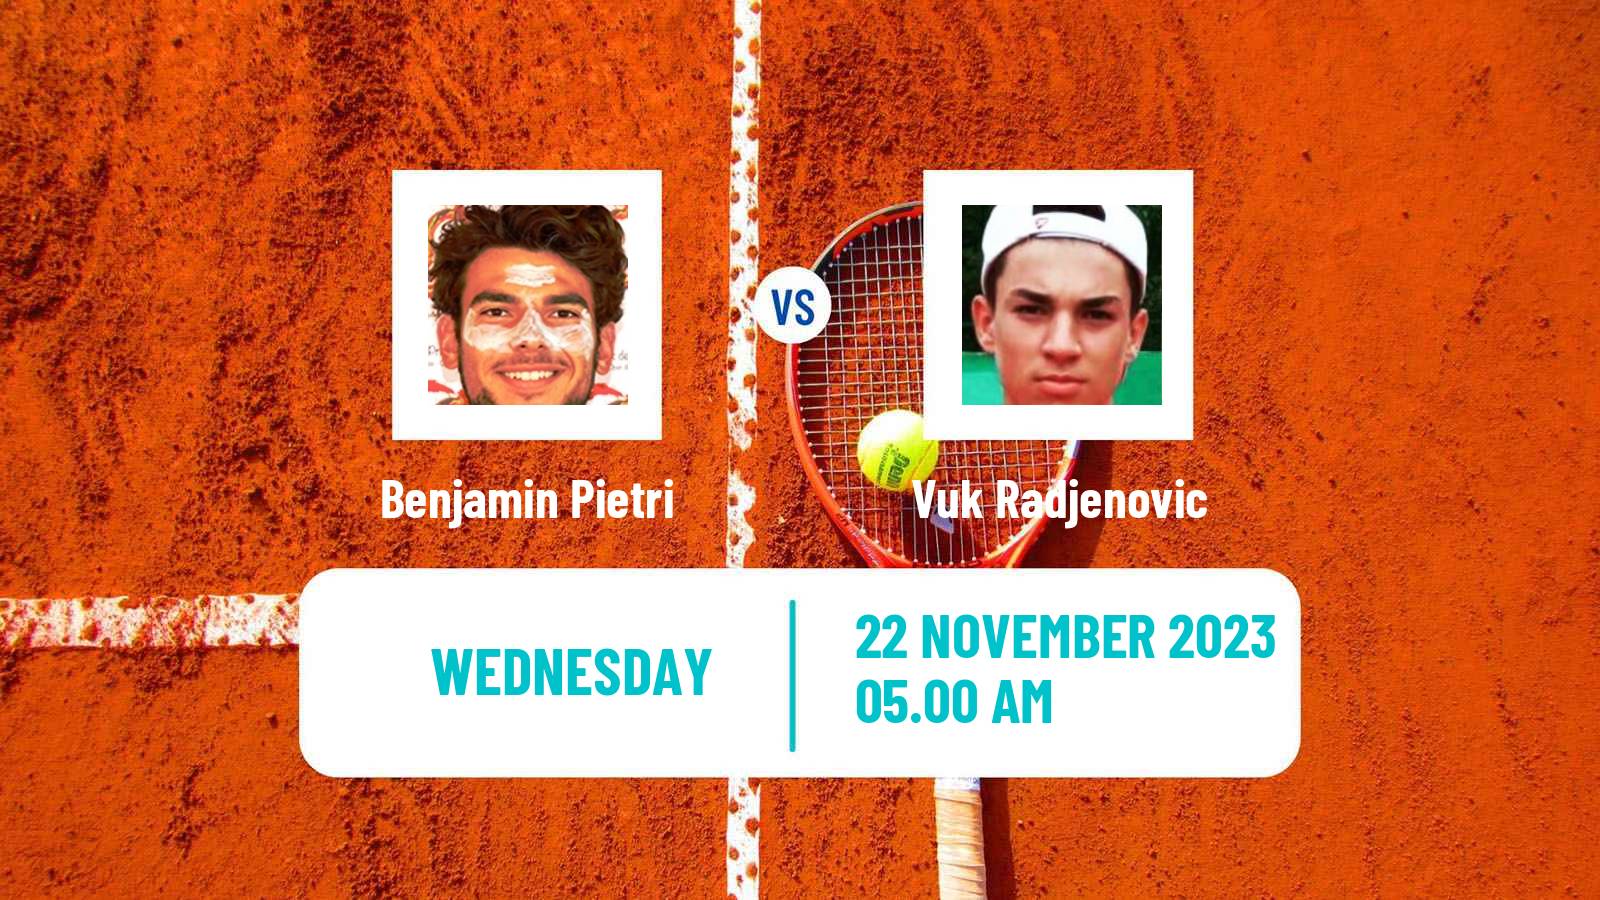 Tennis ITF M15 Heraklion 6 Men Benjamin Pietri - Vuk Radjenovic